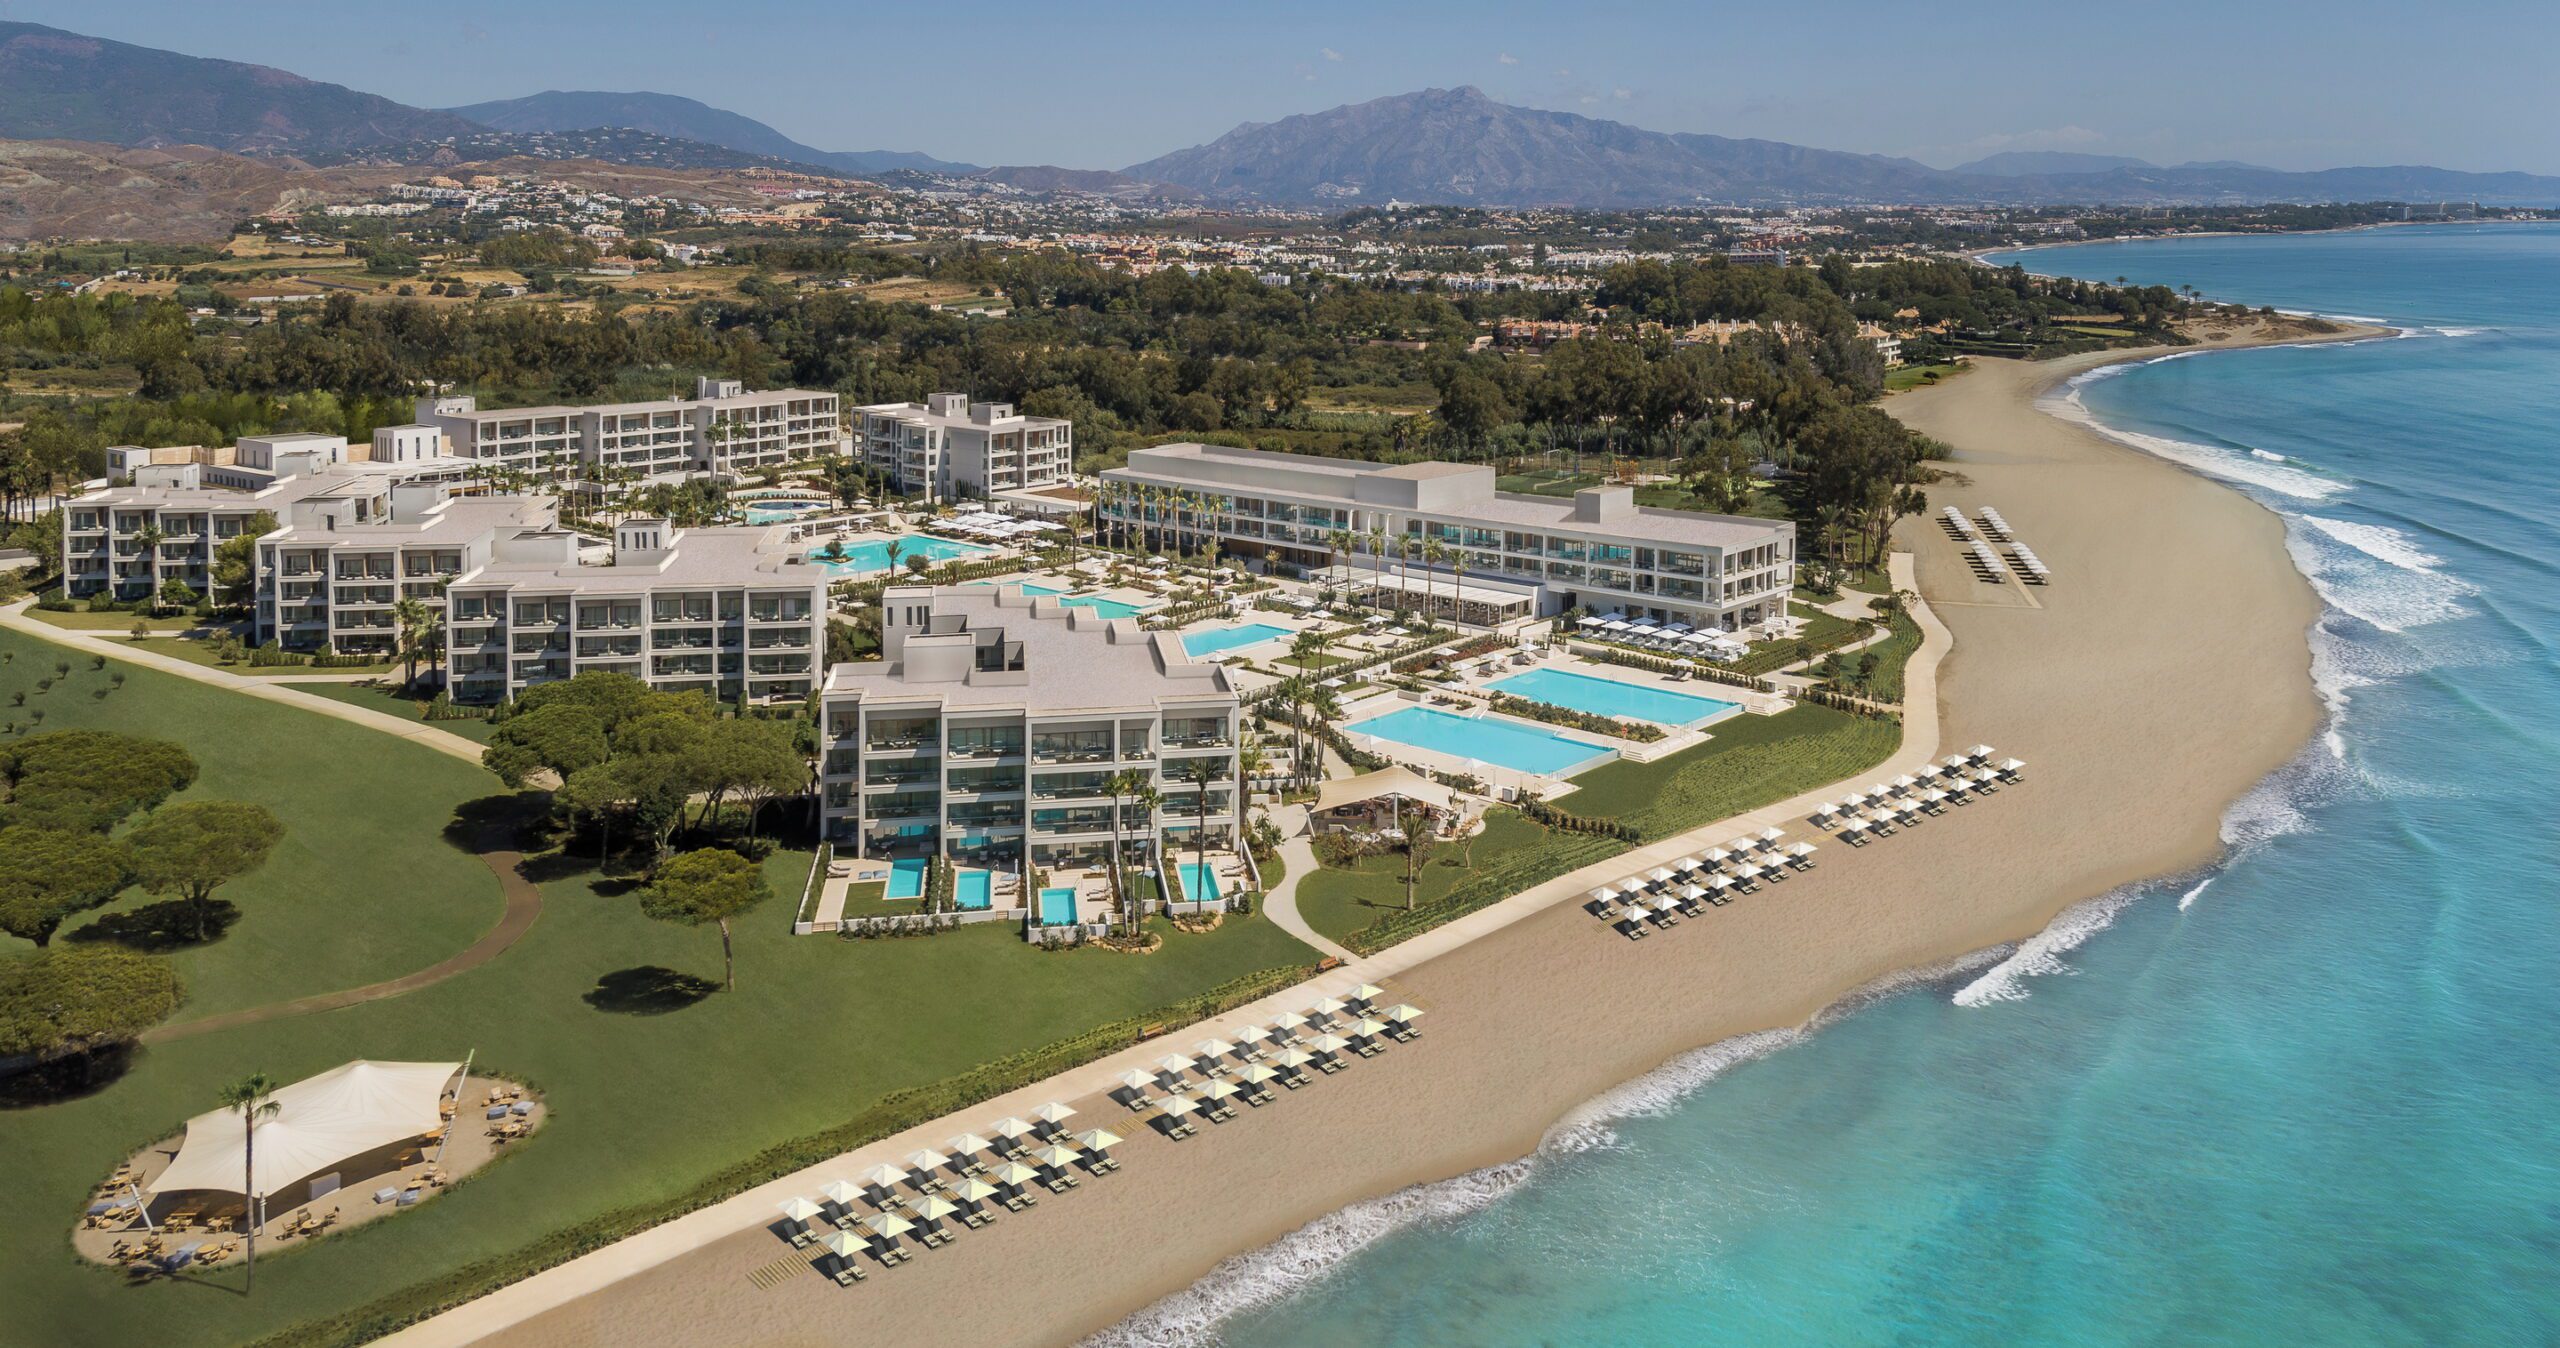 Ikos Resorts setzt Expansion fort und mit dem Ikos Andalusia